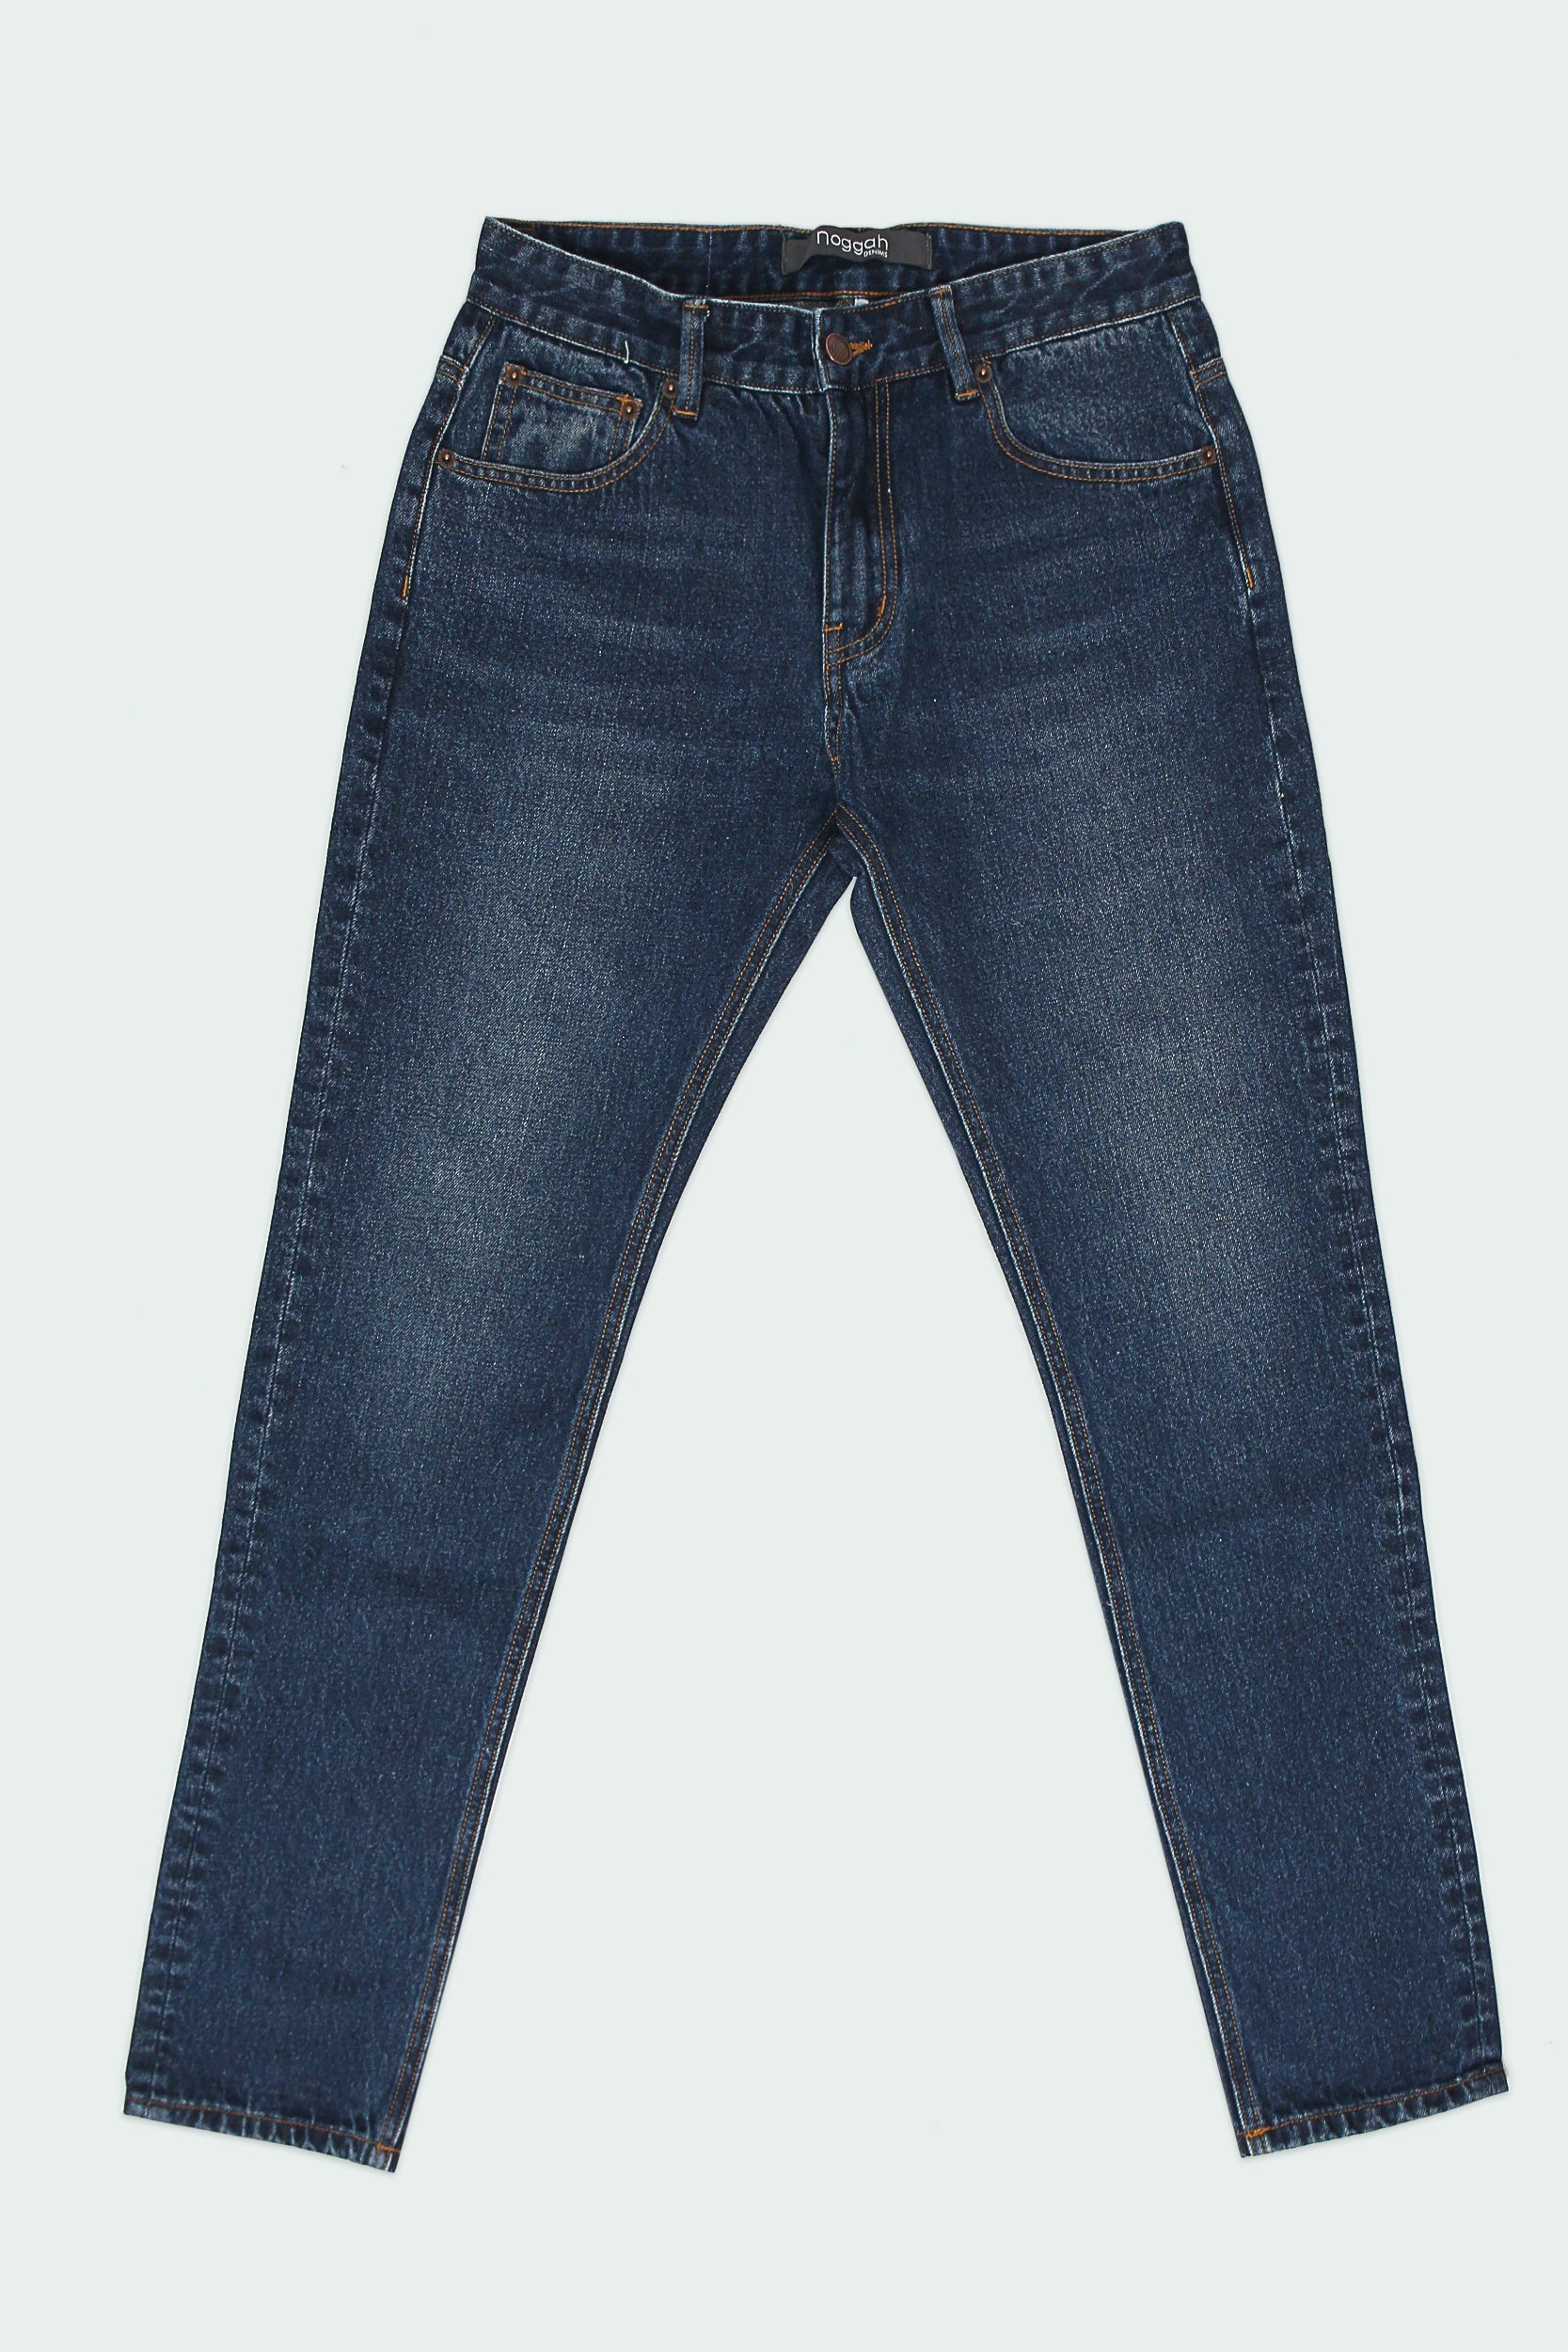 Mens Skinny Jeans Slim Fit Ripped Denim Stretch Trouser Distressed Pants UK  Size | eBay